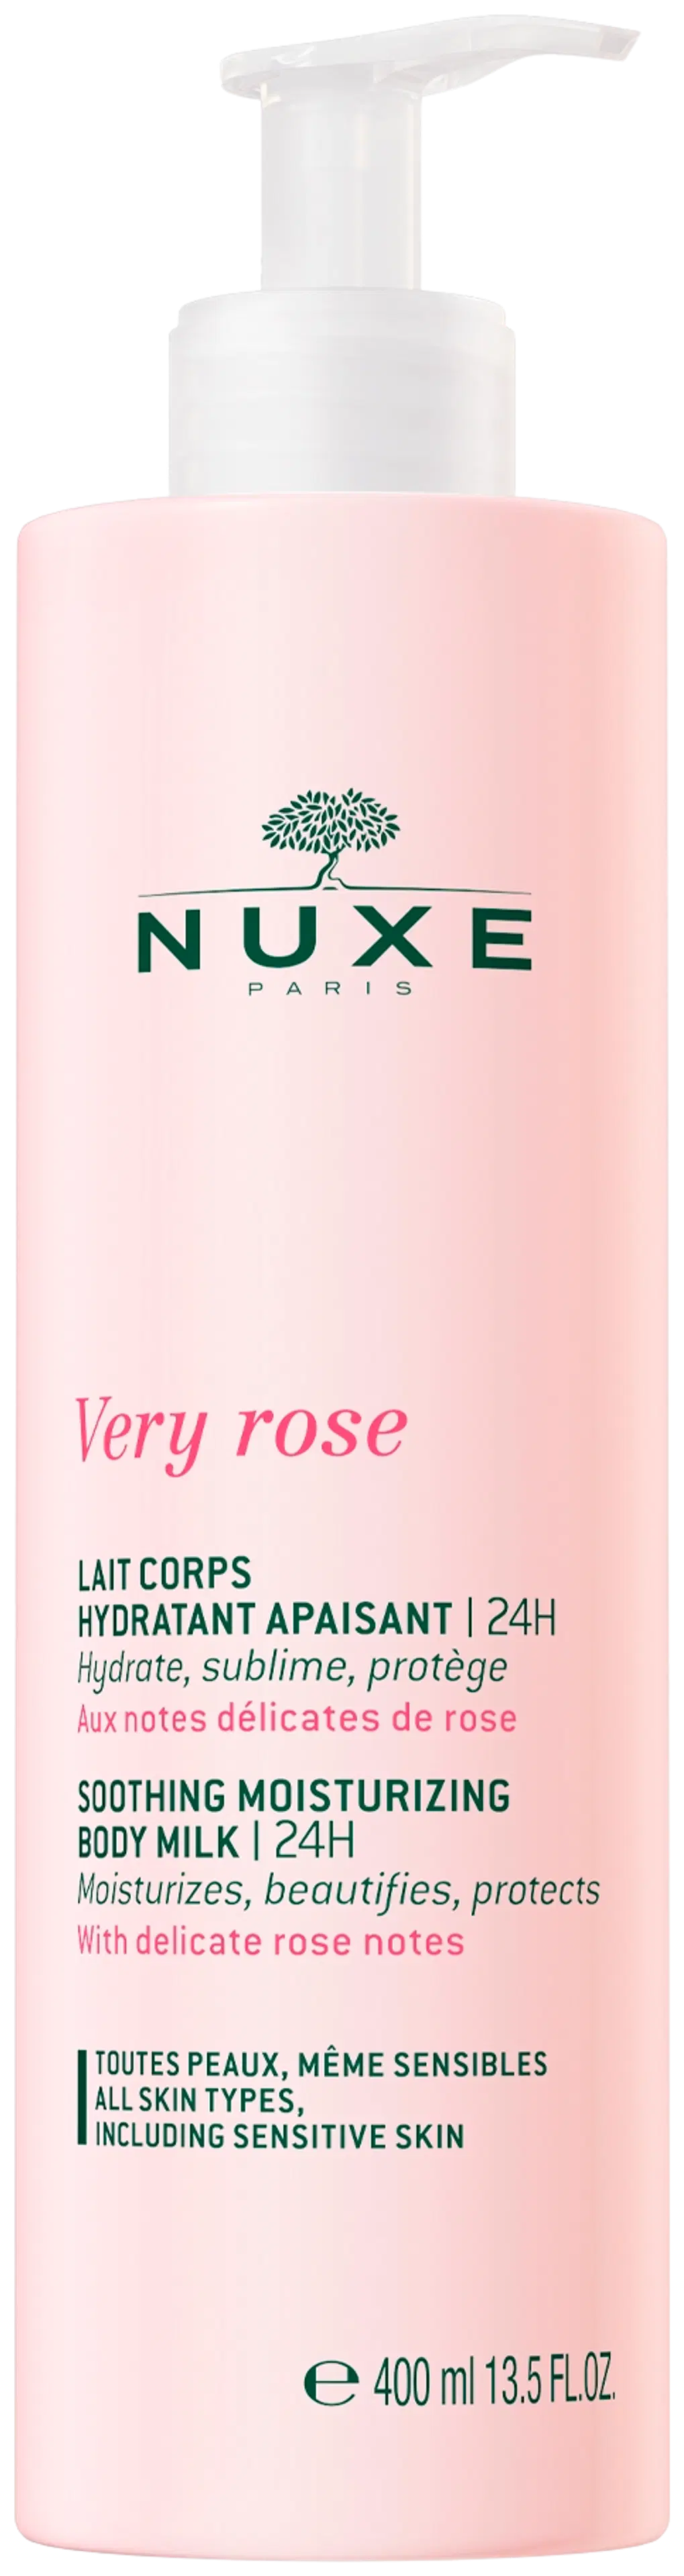 NUXE Very Rose Softening Moisturising Body Milk vartaloemulsio 400 ml